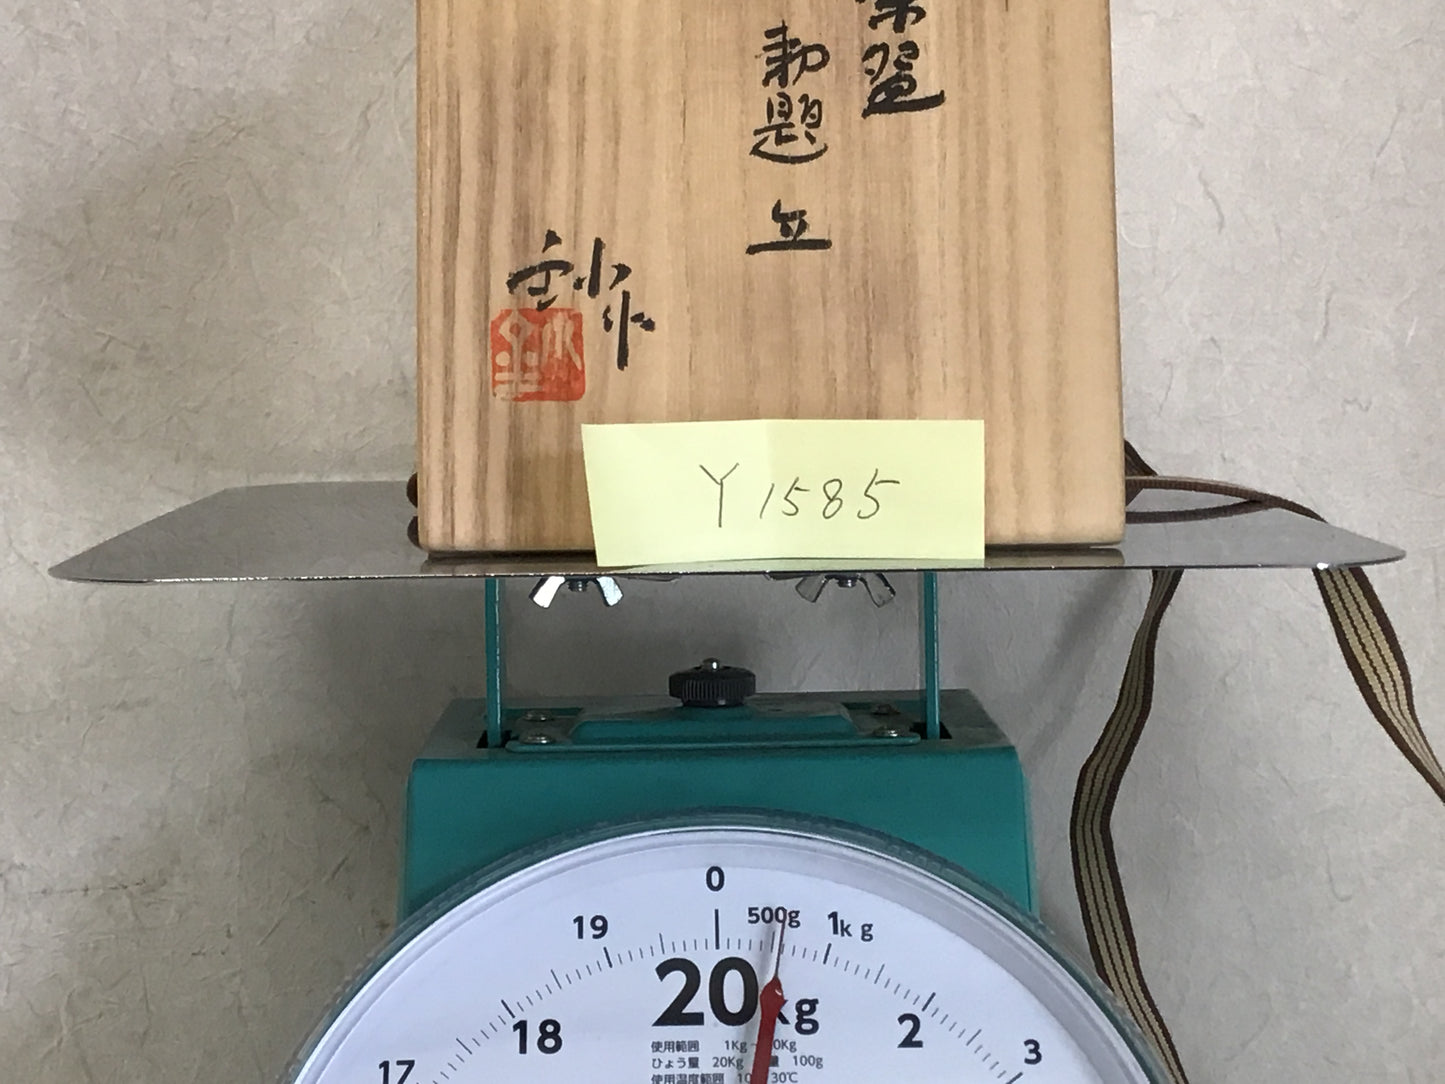 Y1585 CHAWAN Seto-ware signed box Japanese bowl pottery Japan tea ceremony